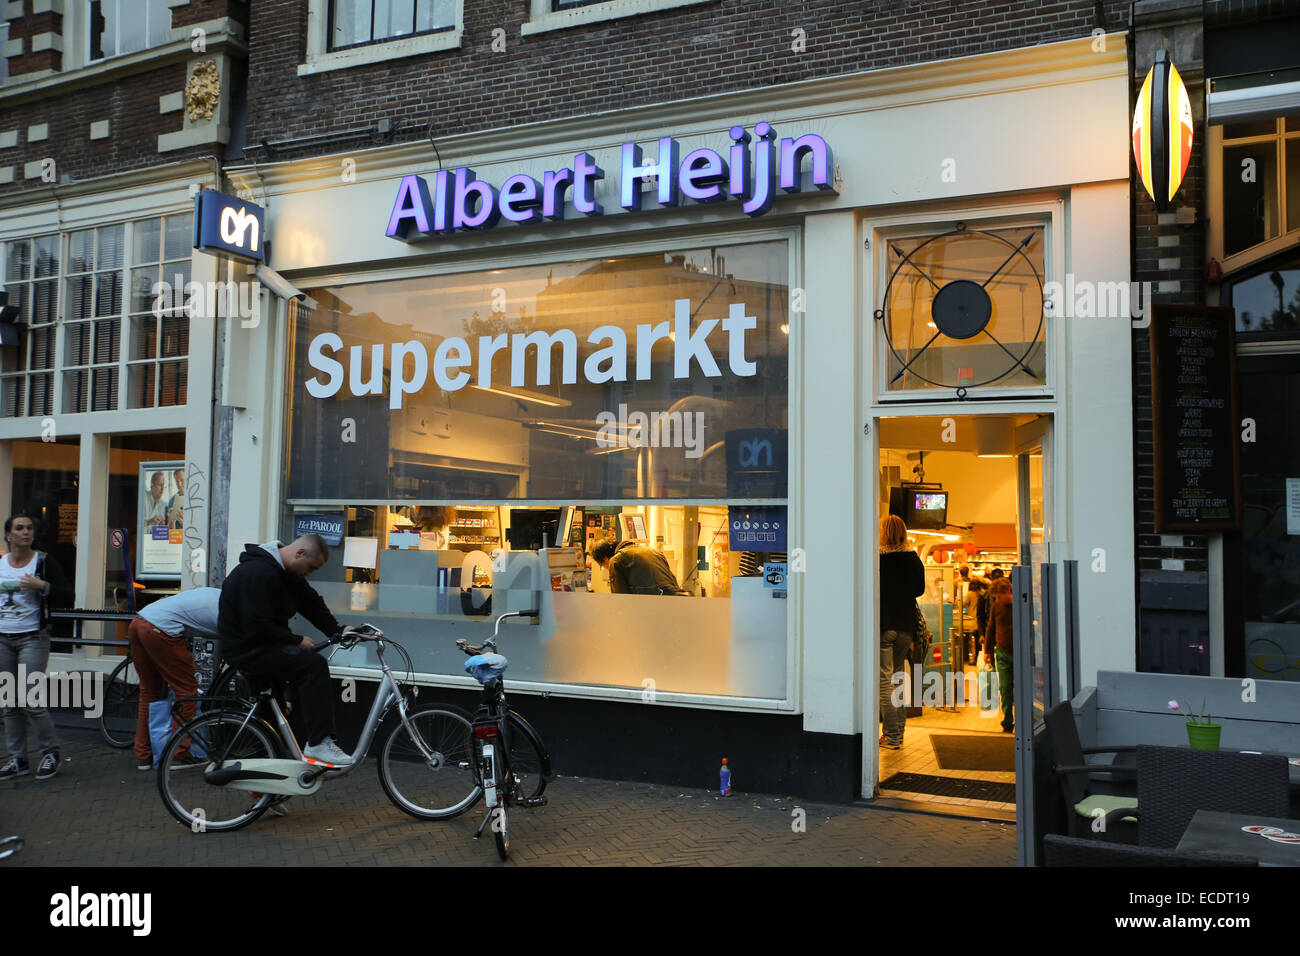 Albert Heijn Supermarket Grocery Store Amsterdam ECDT19 